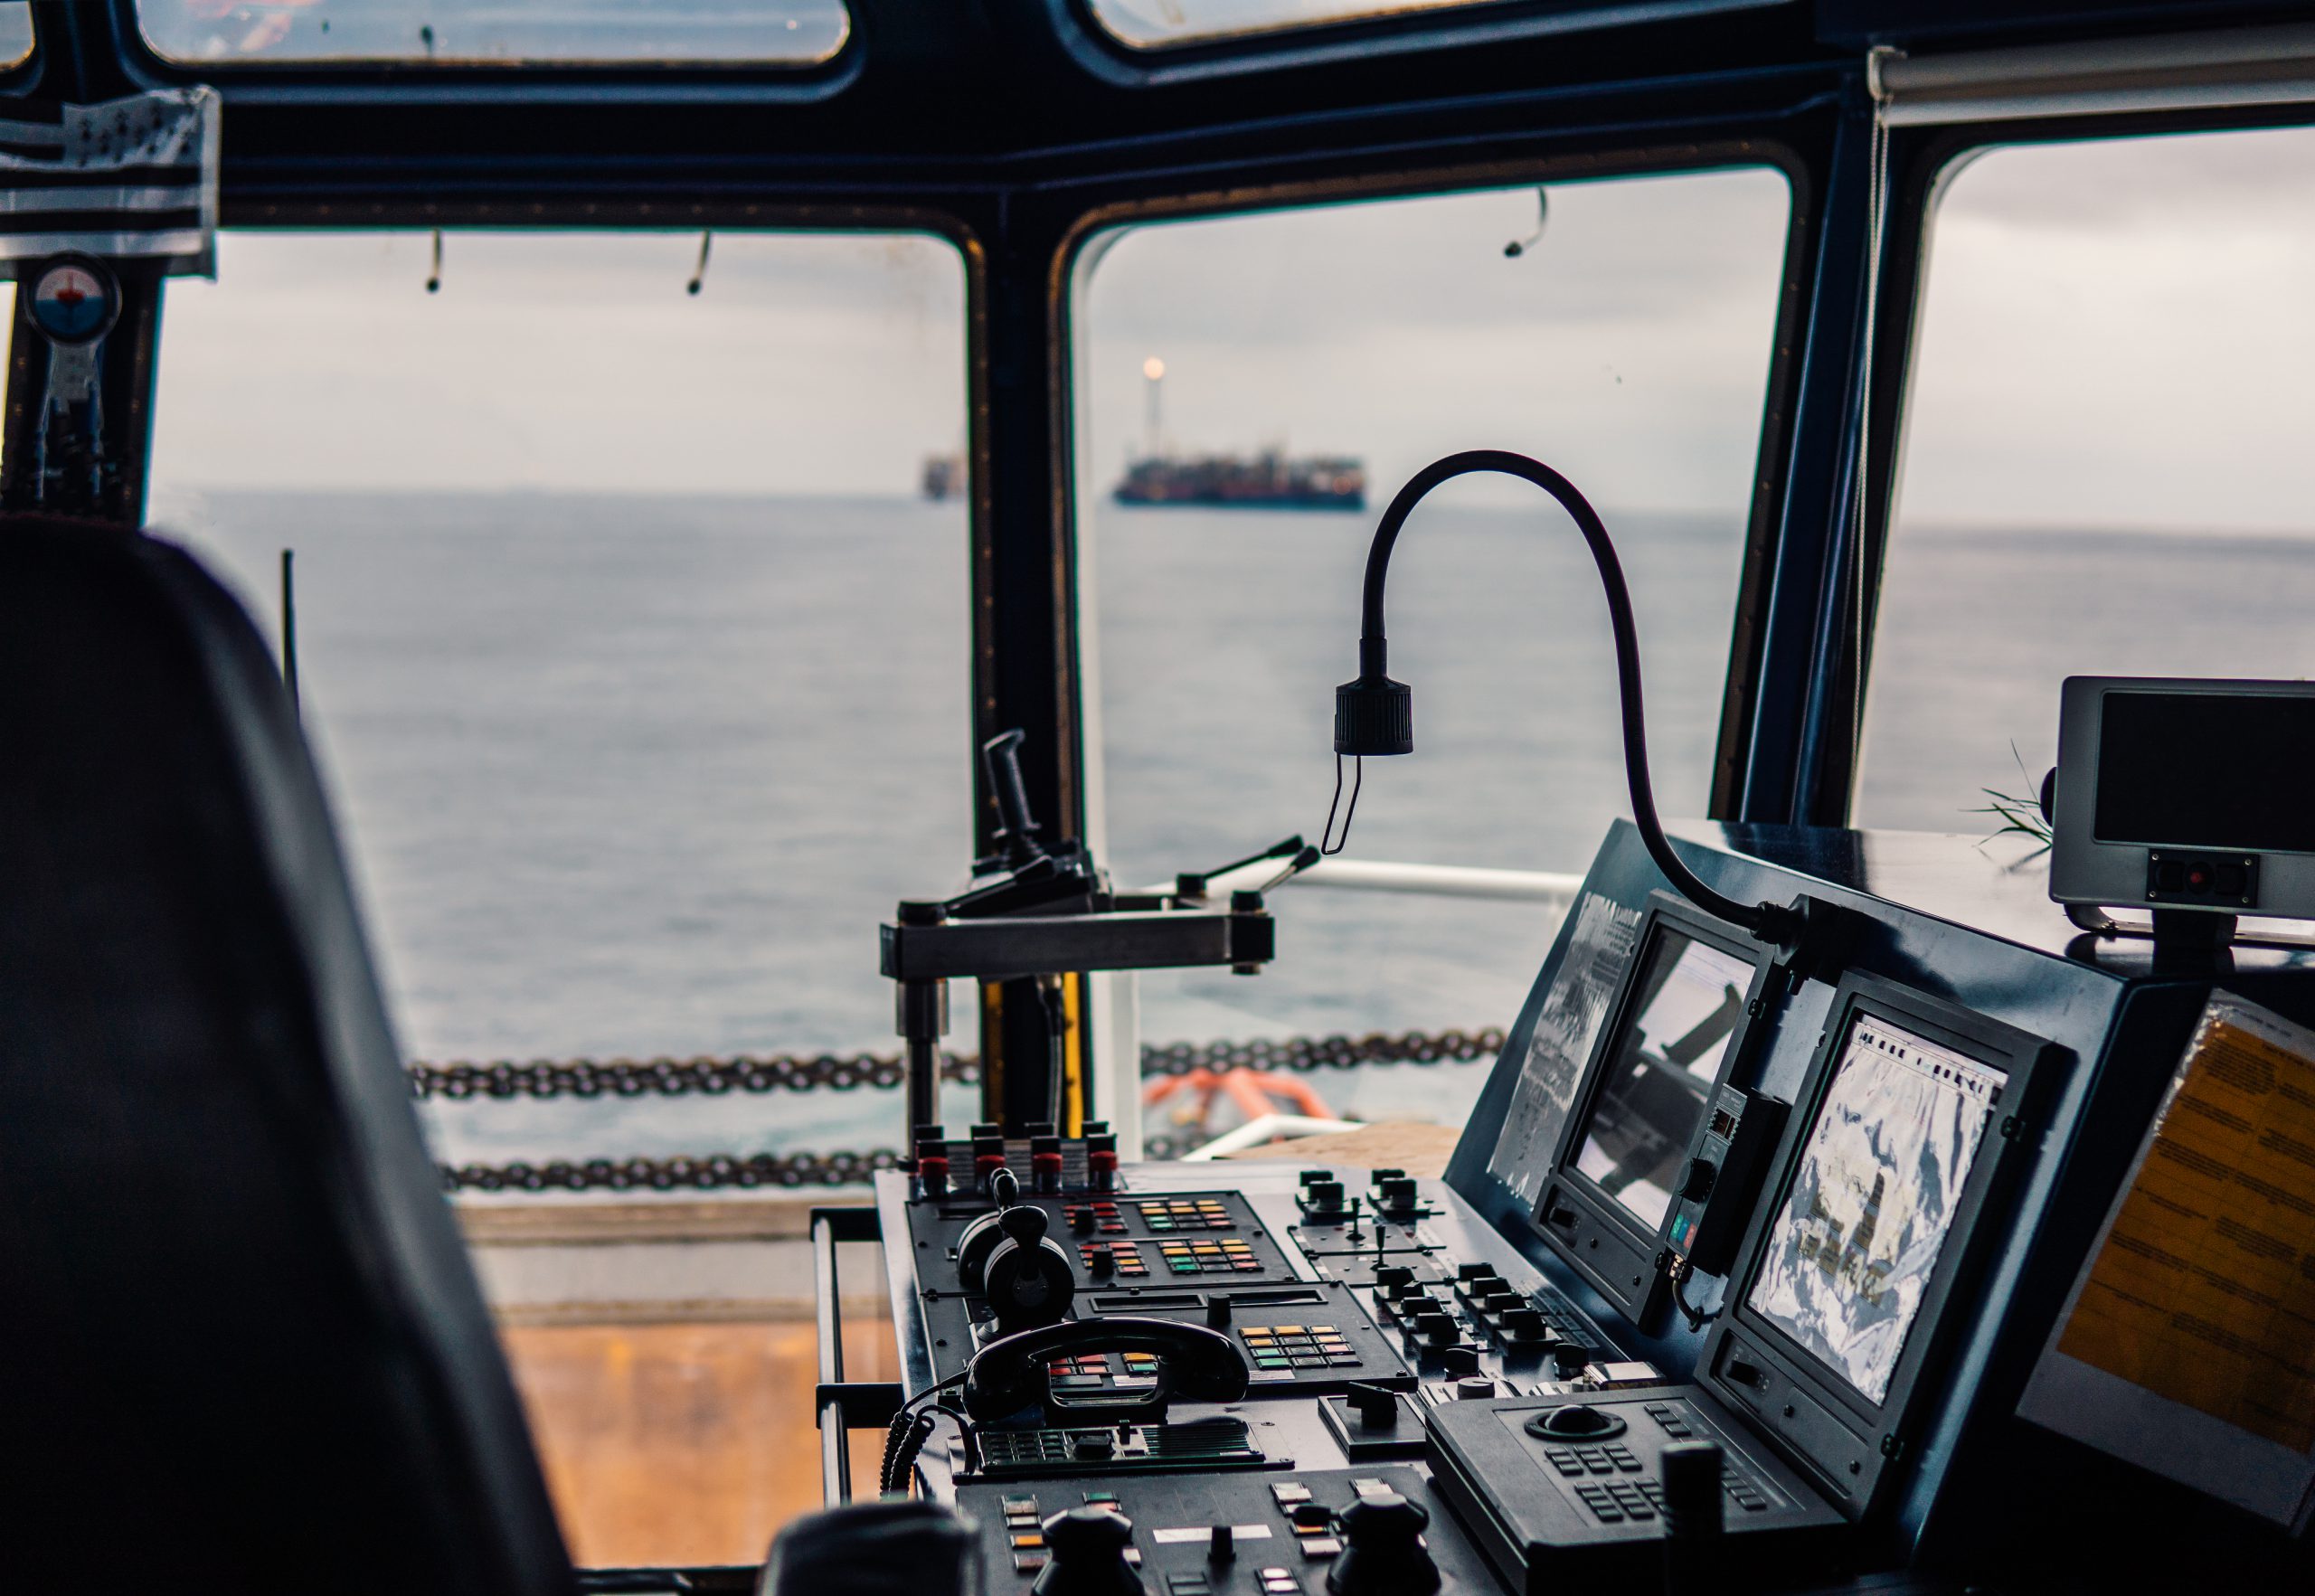 Bridge ship equipment of ffshore dp vessel thruster pitch propellers telegraph handles vhf radio, navigation devices